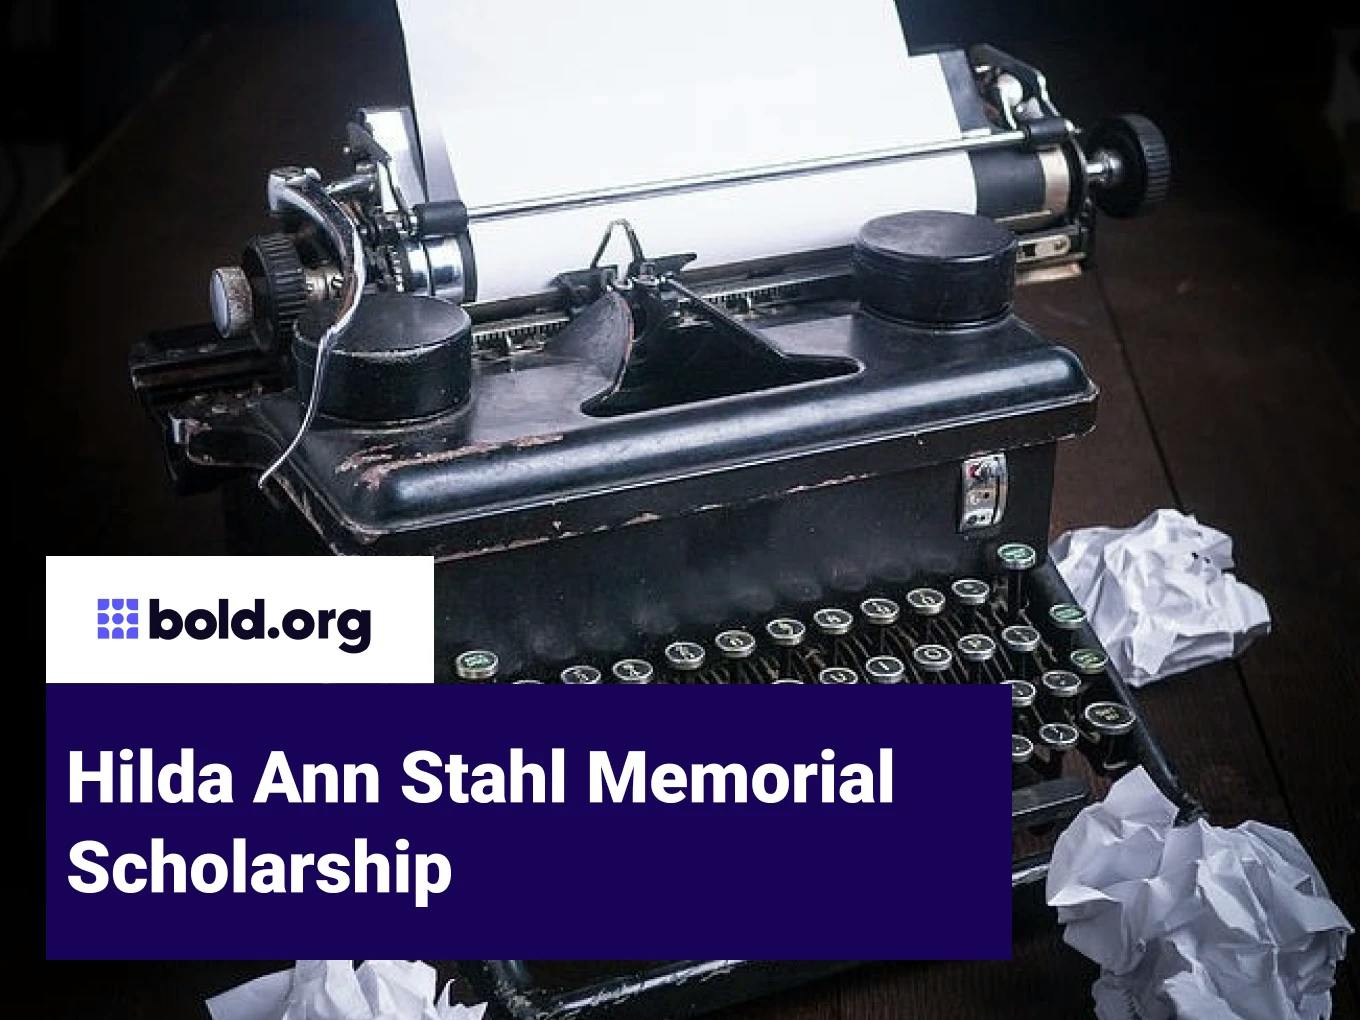 Hilda Ann Stahl Memorial Scholarship